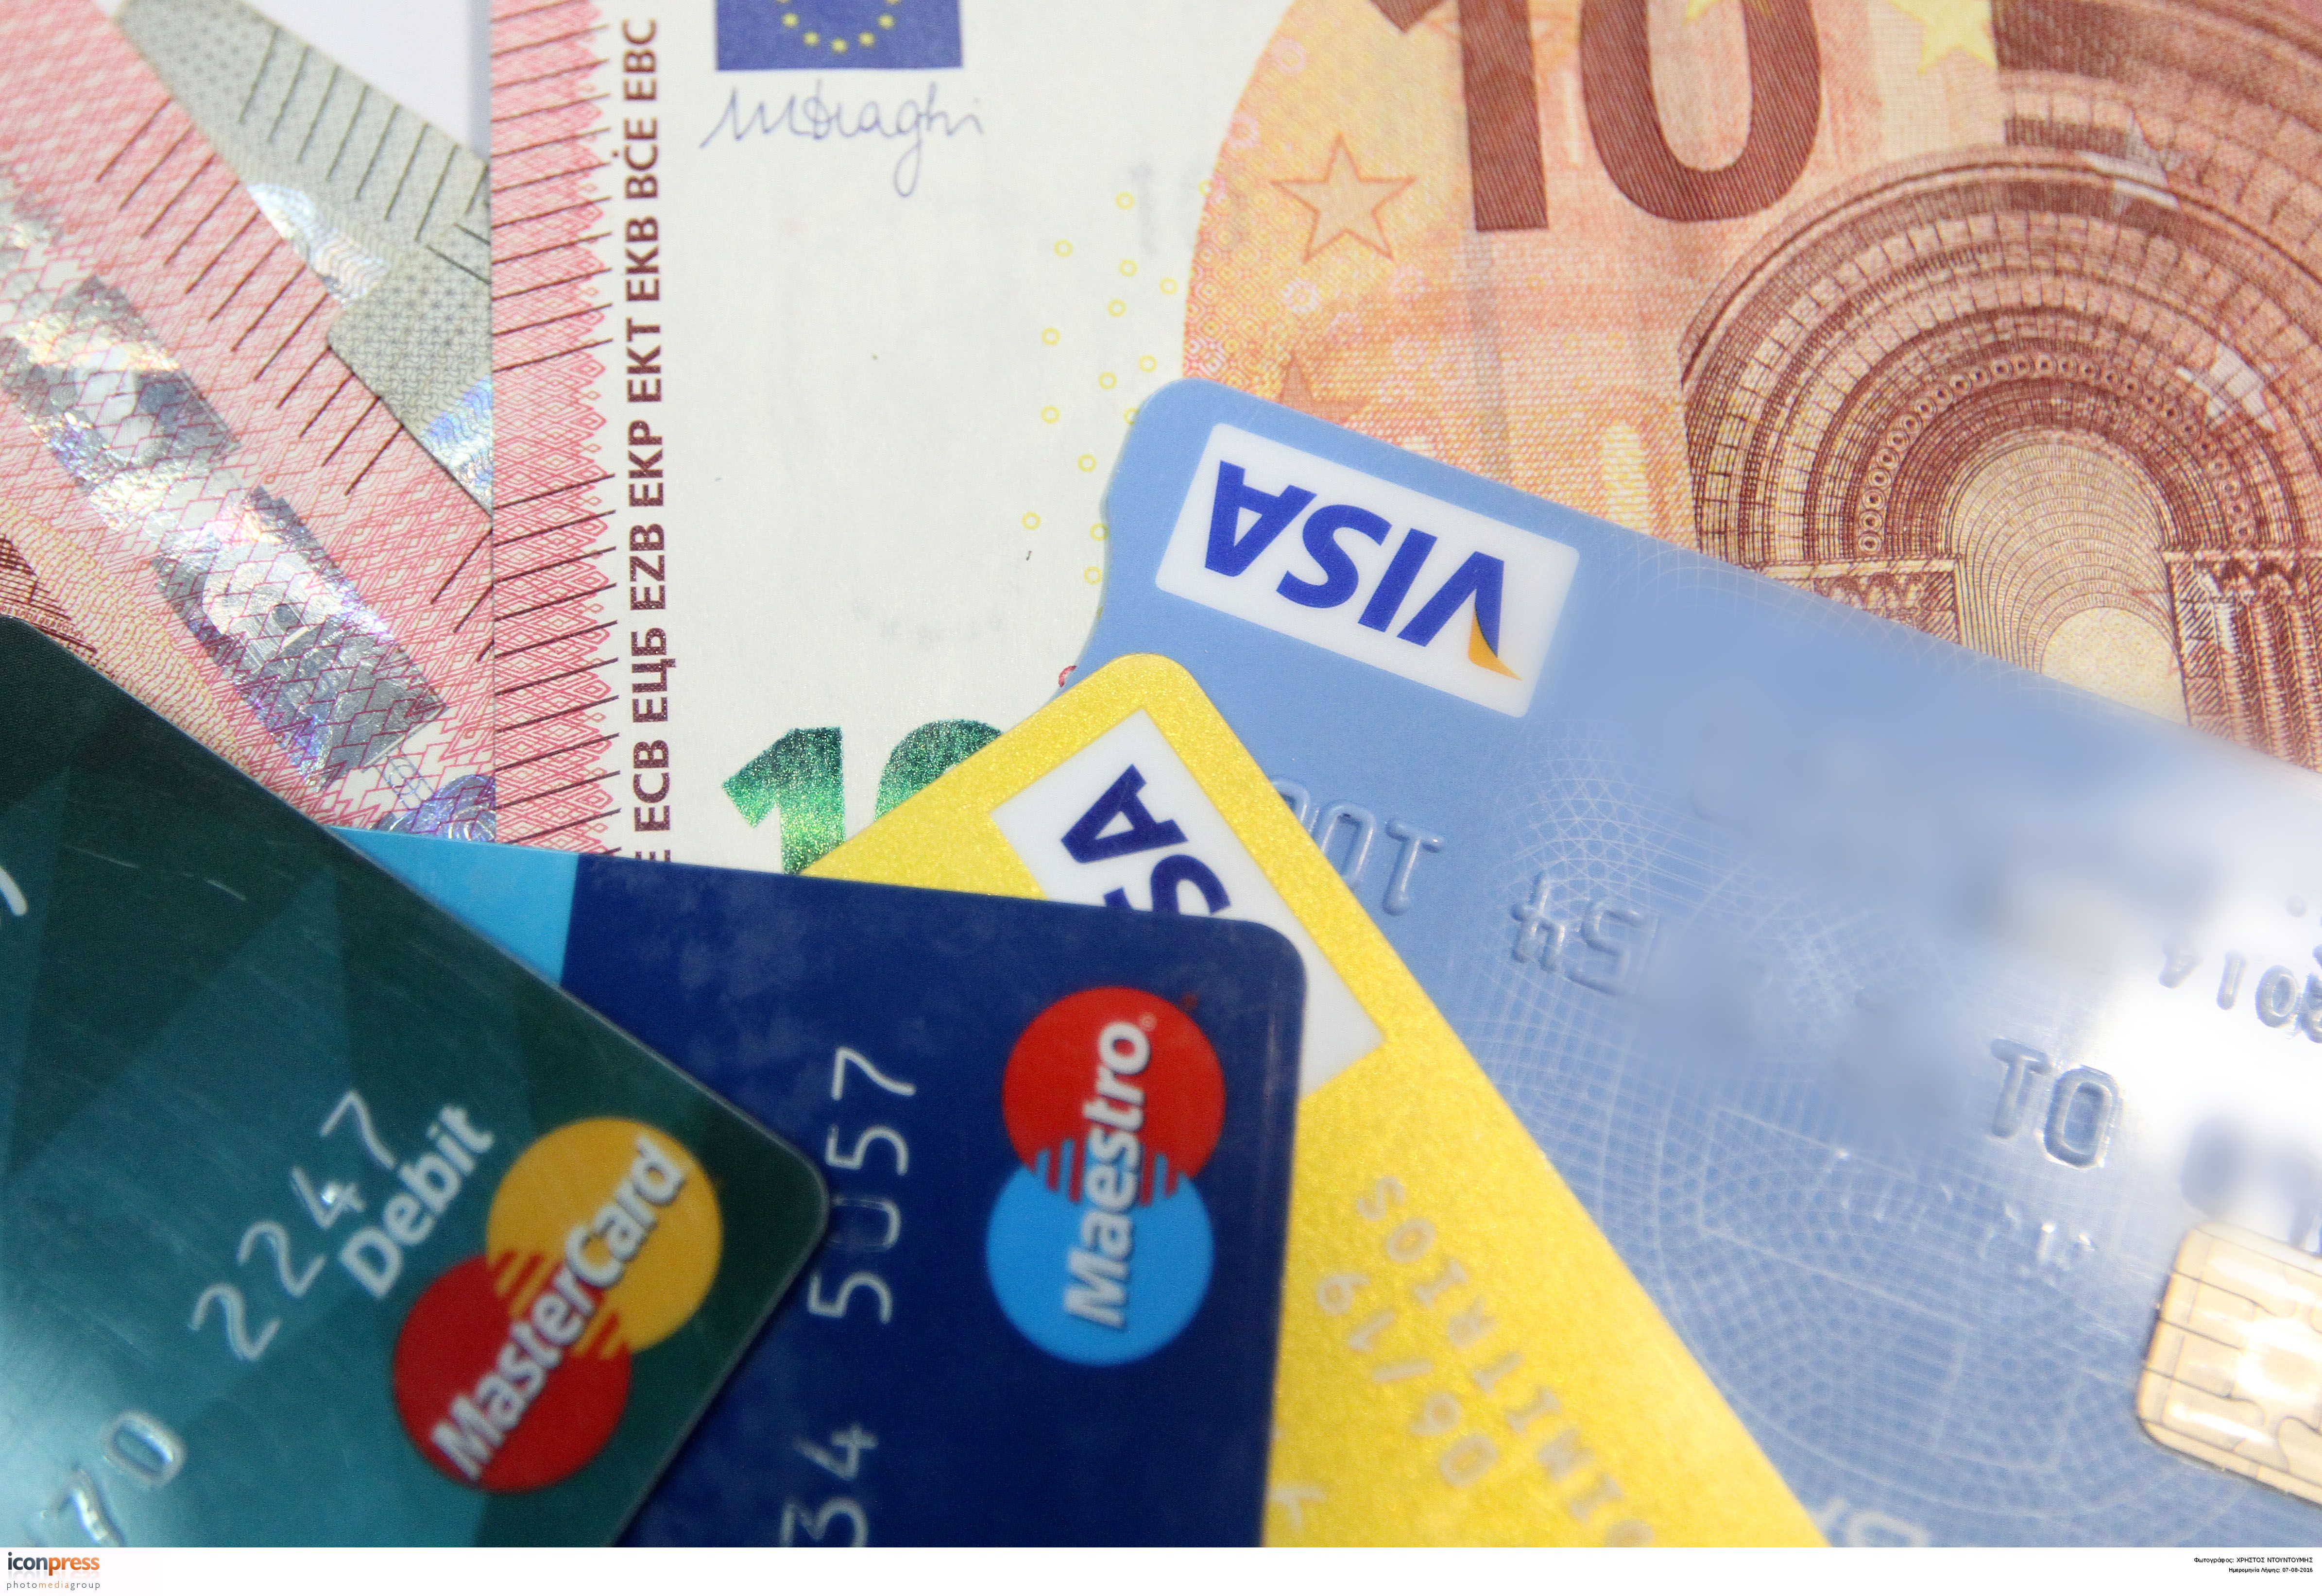 1,000 euro rewards in tax bureau receipts lottery